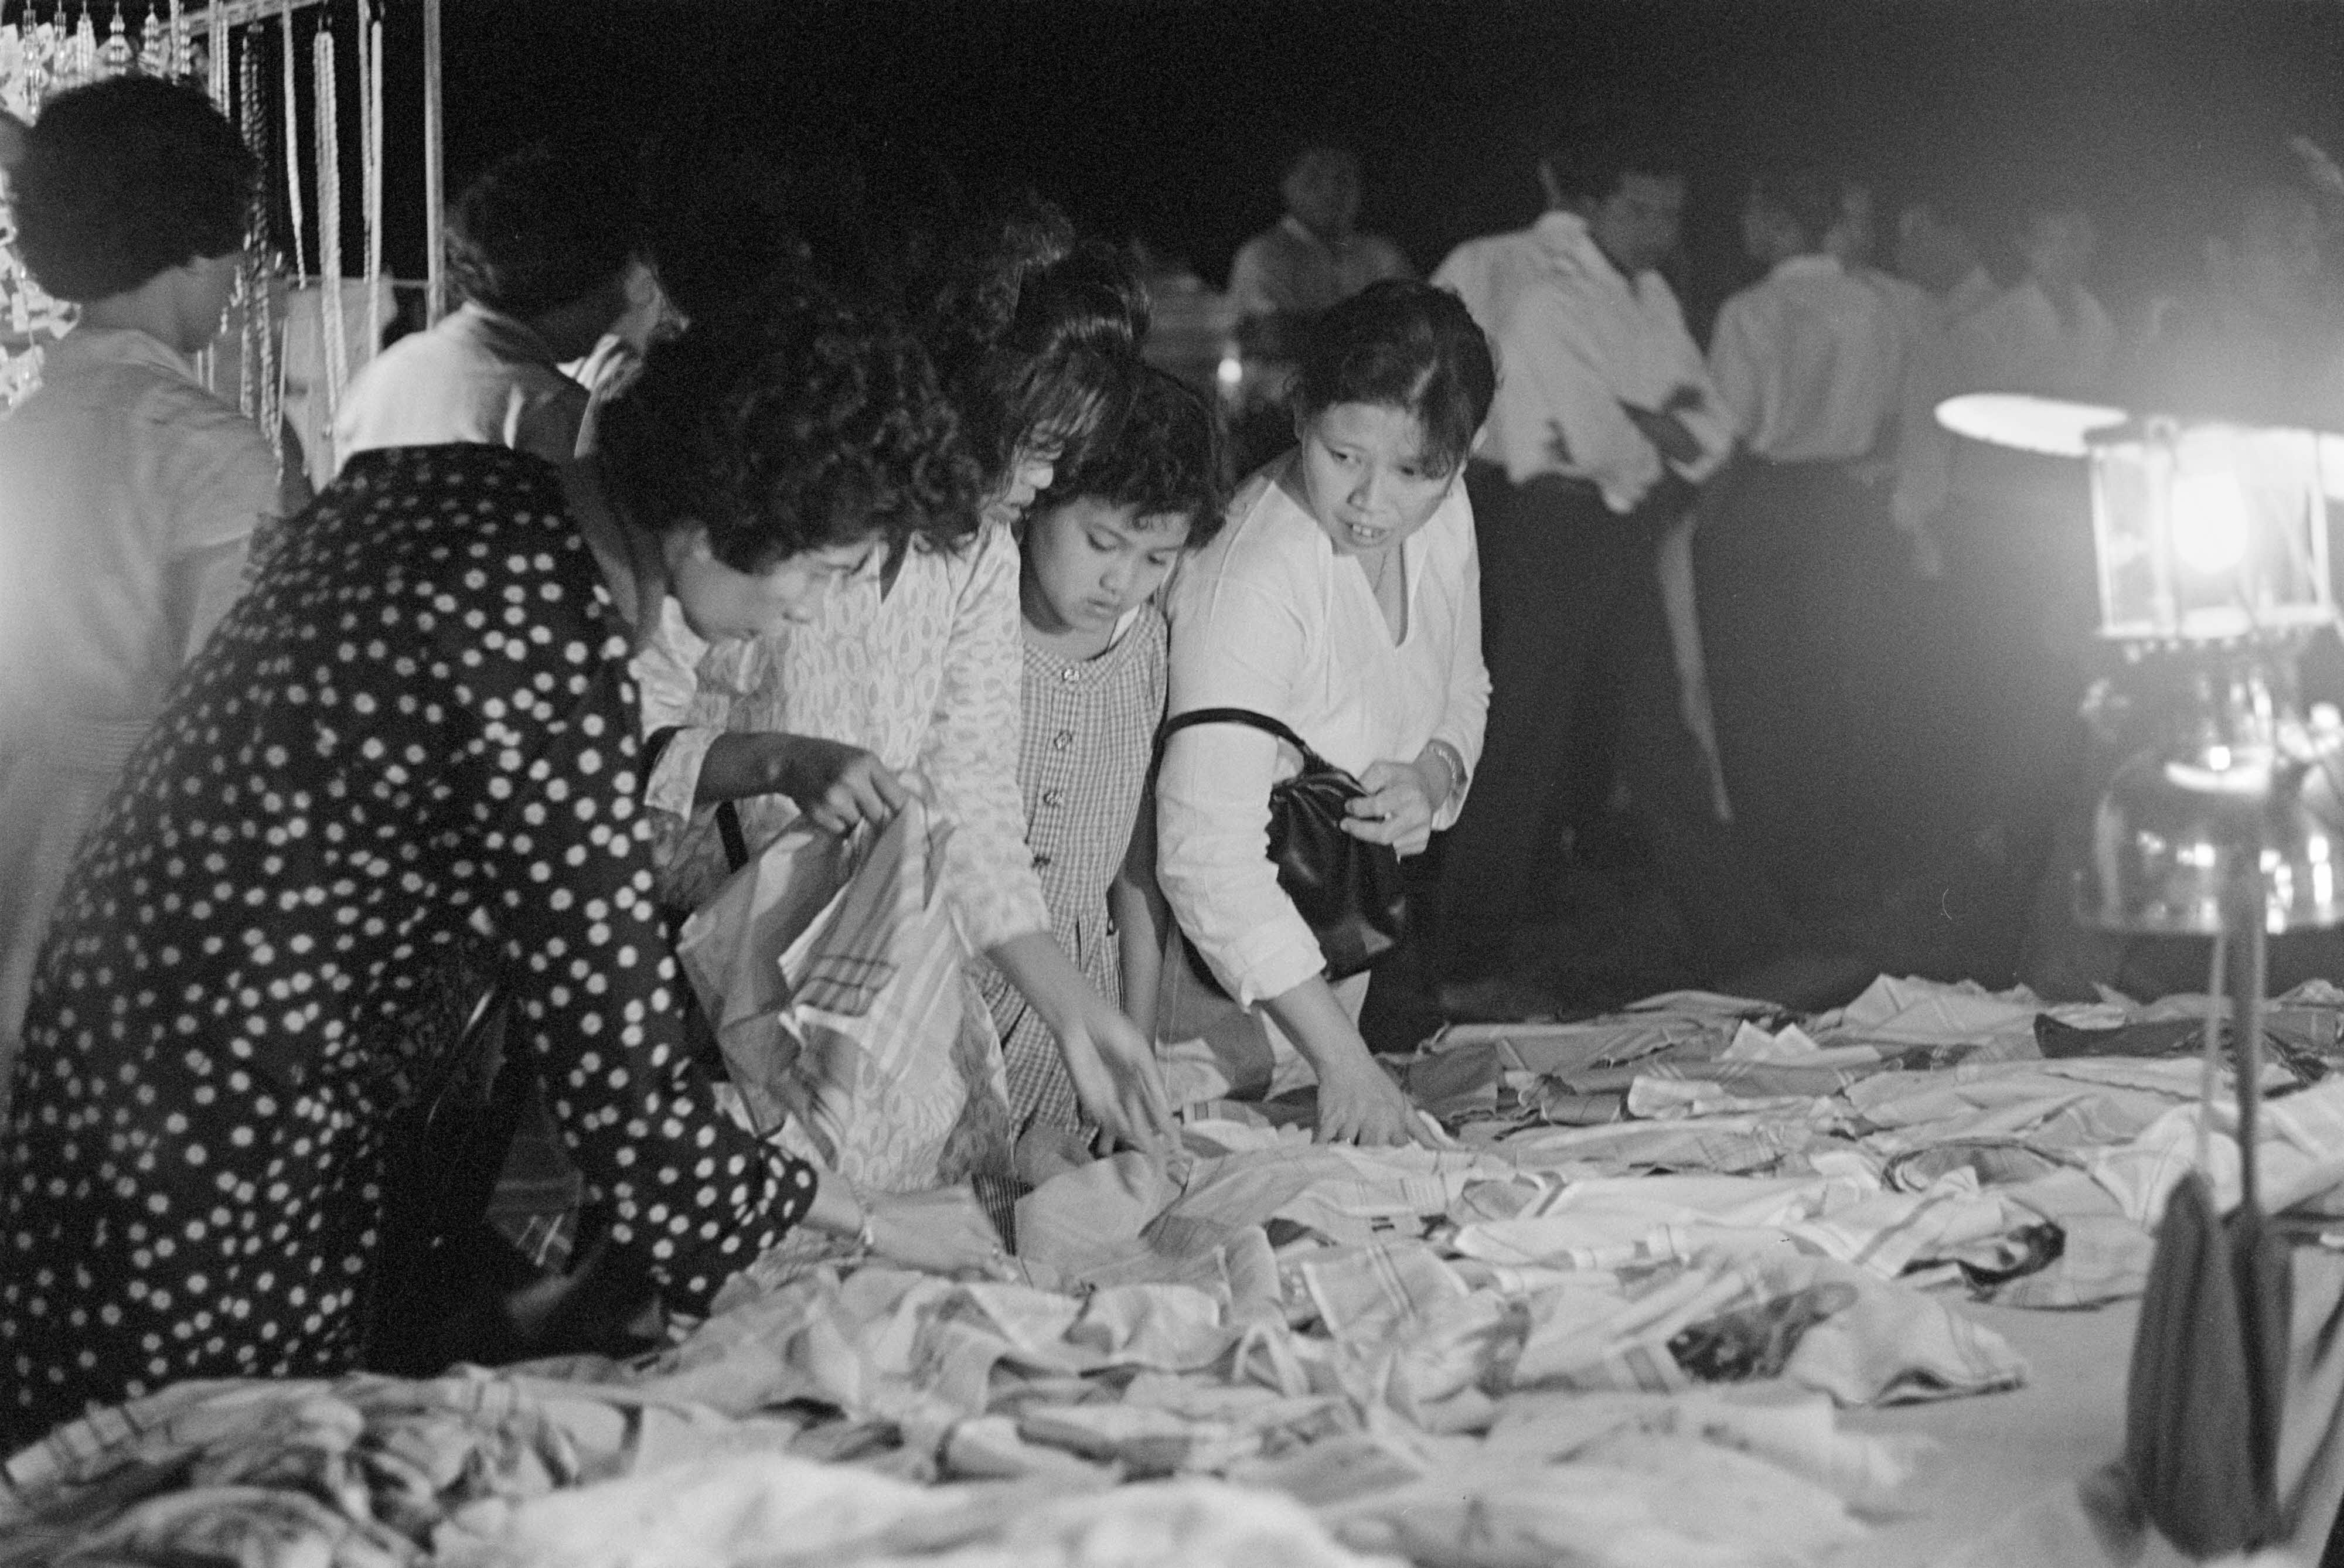 Women shopping at the Woodlands pasar malam, 1963